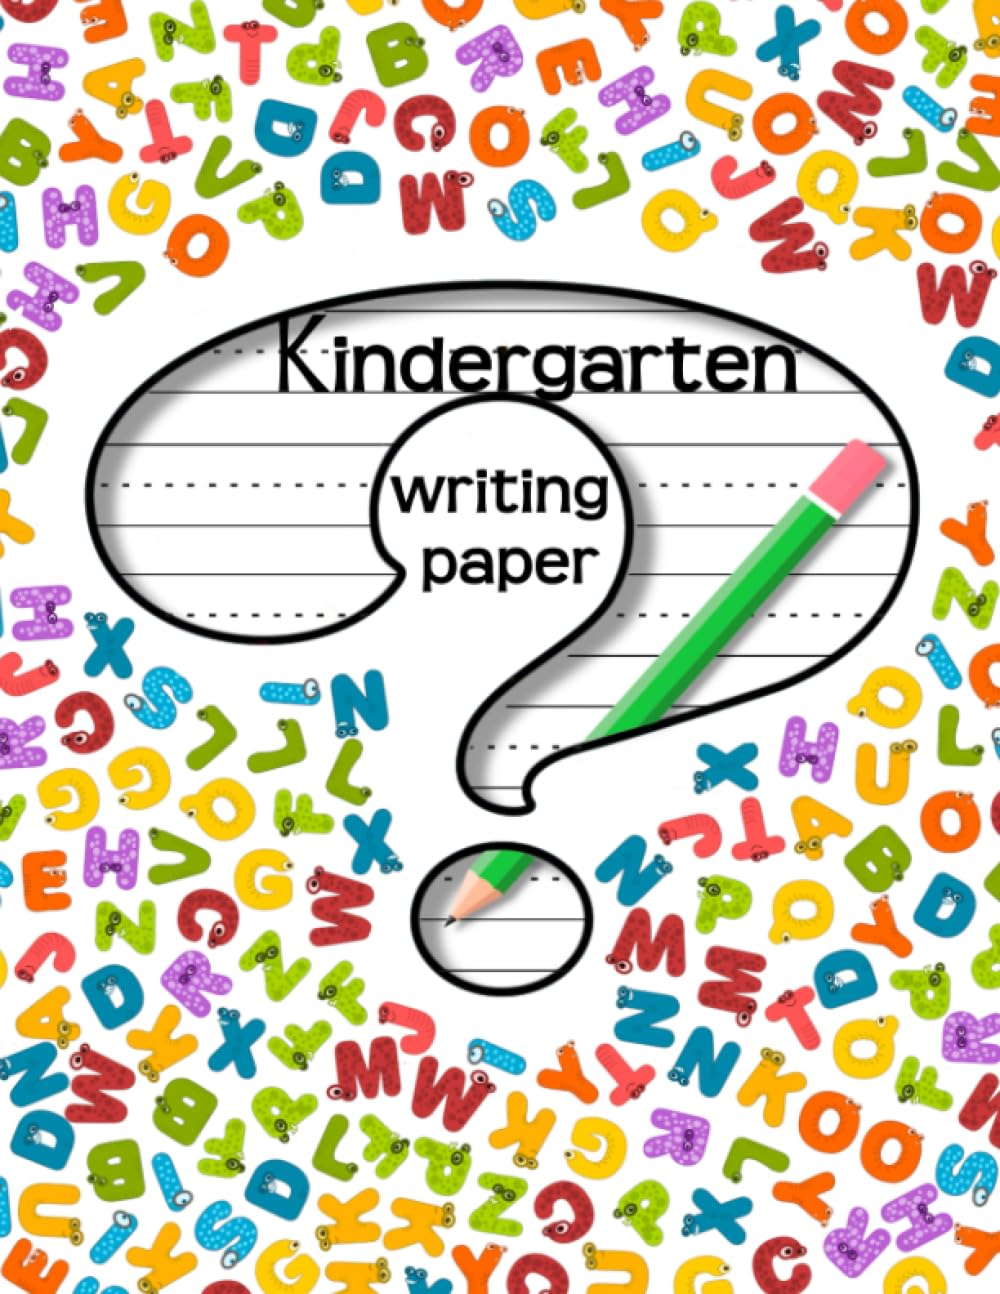 Guess What kindergarten handwriting paper